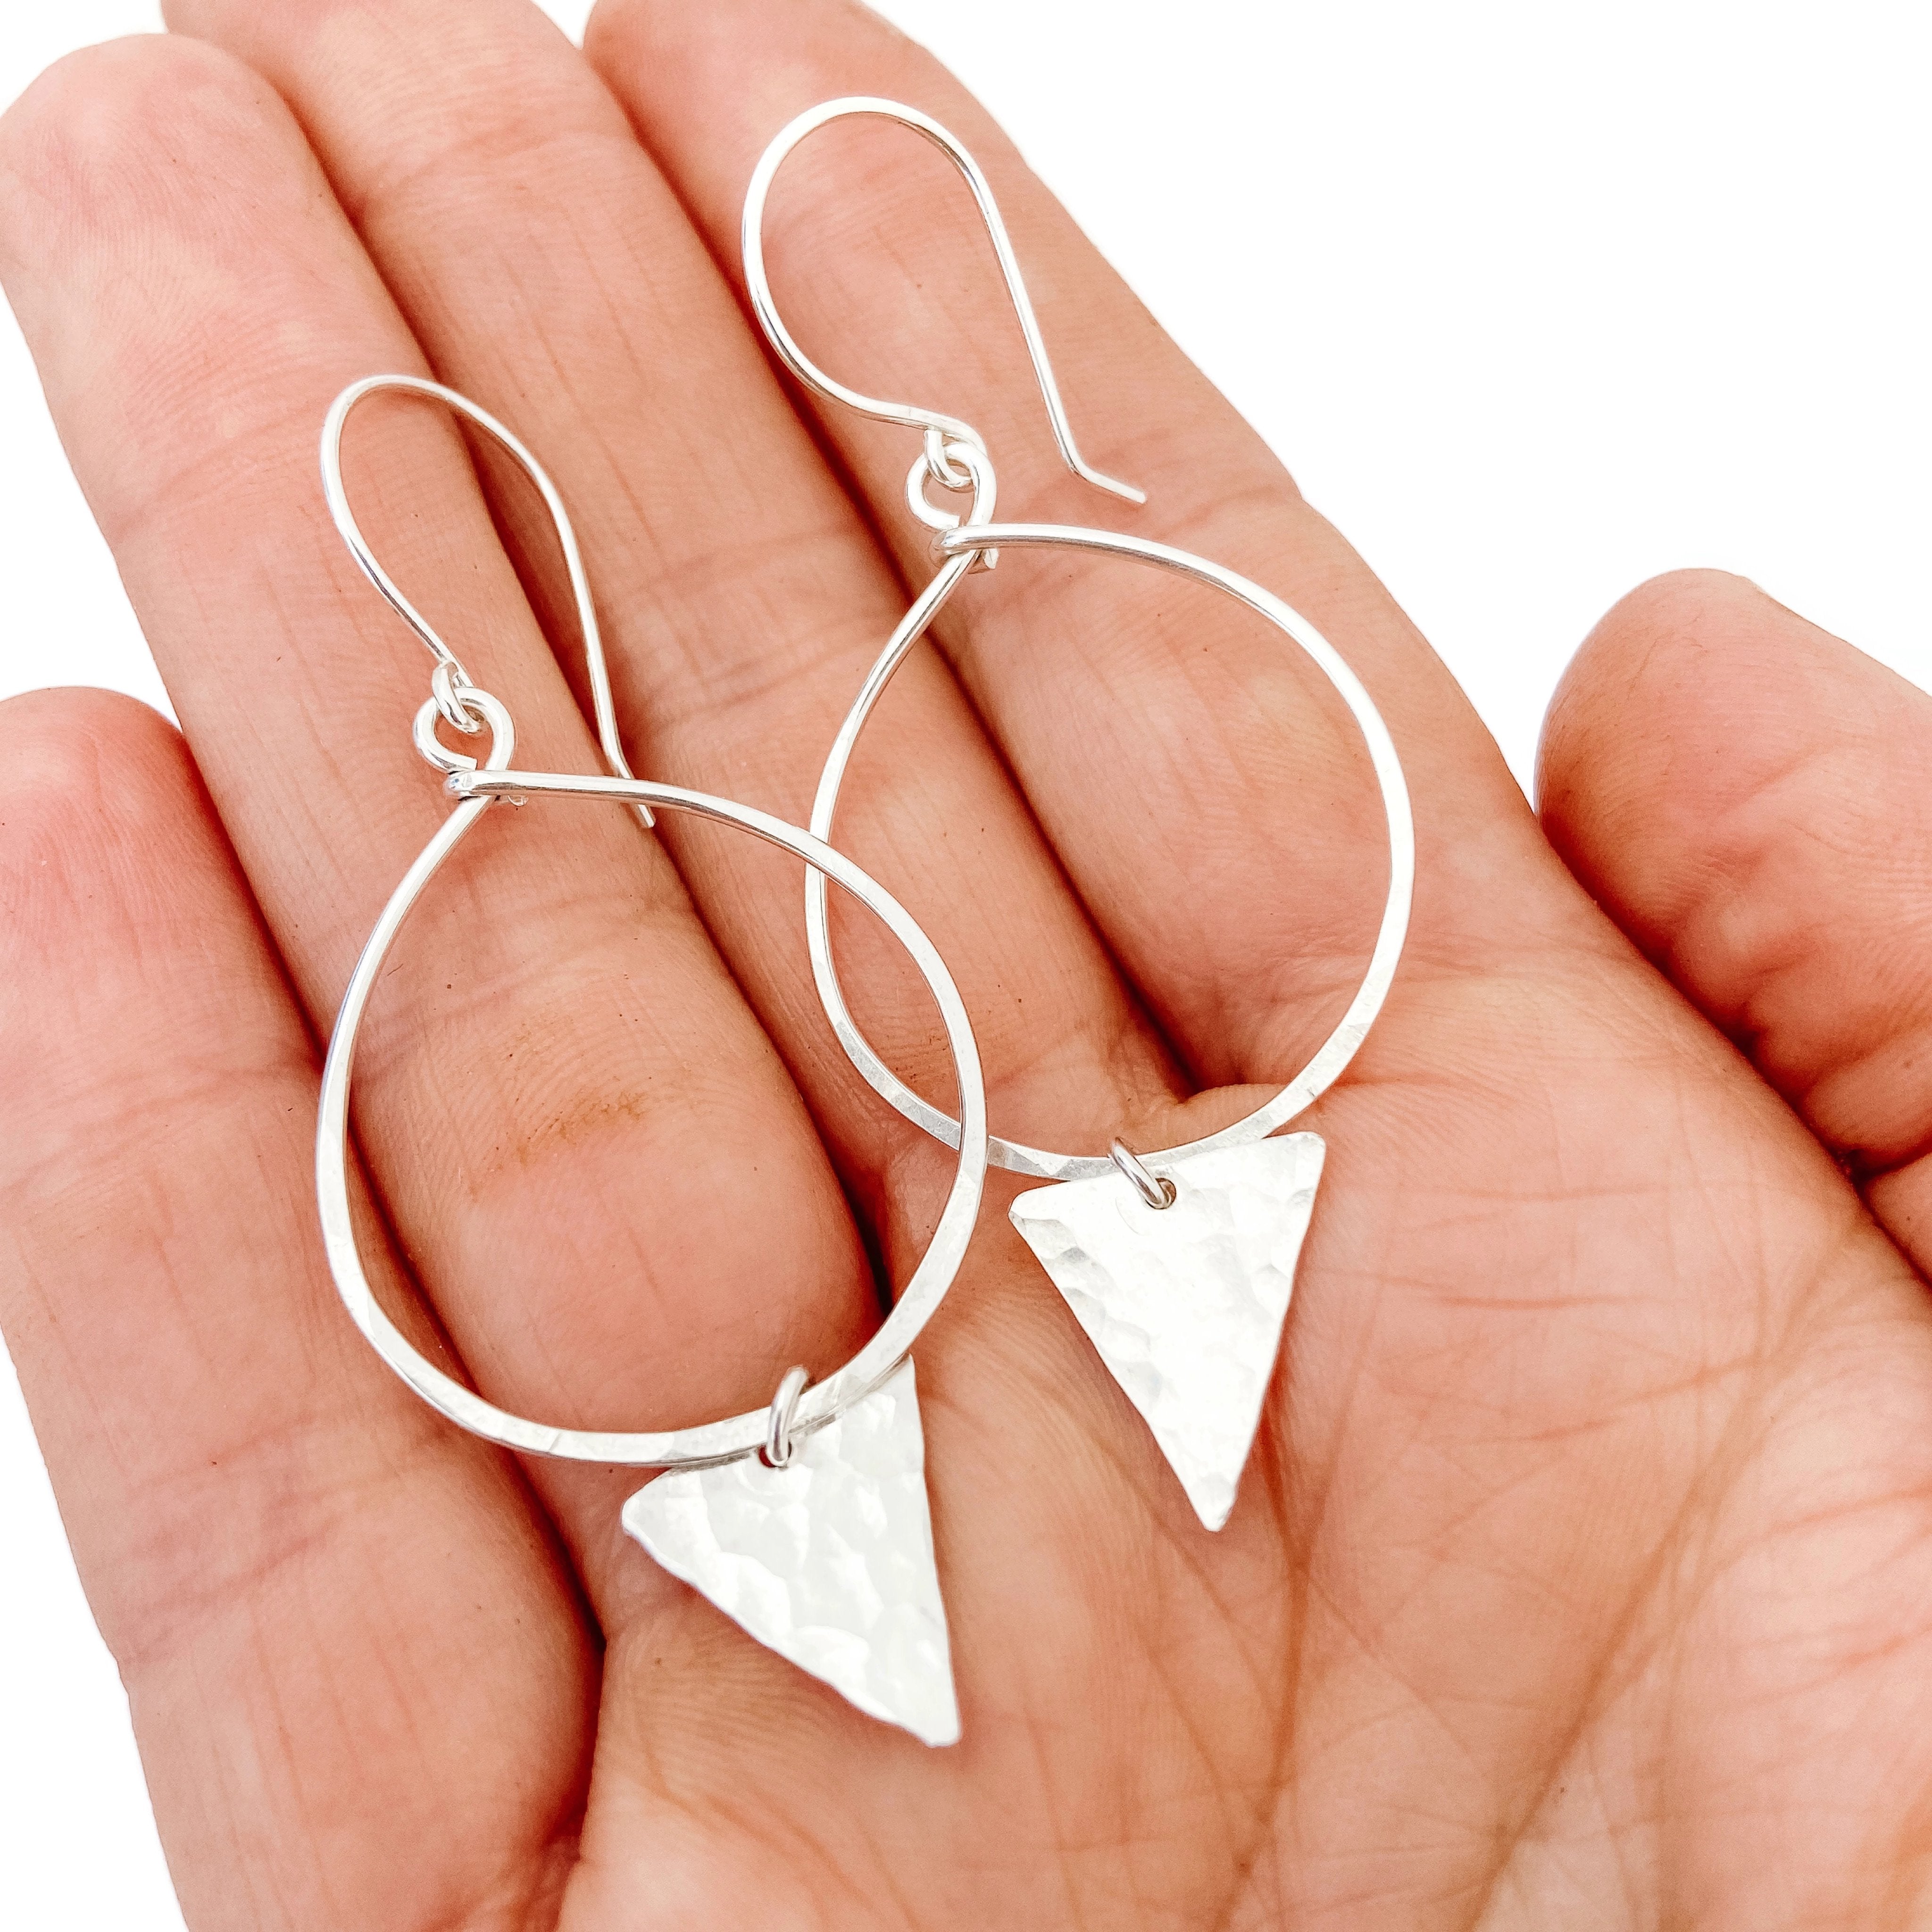 Hoop Earrings with Triangle